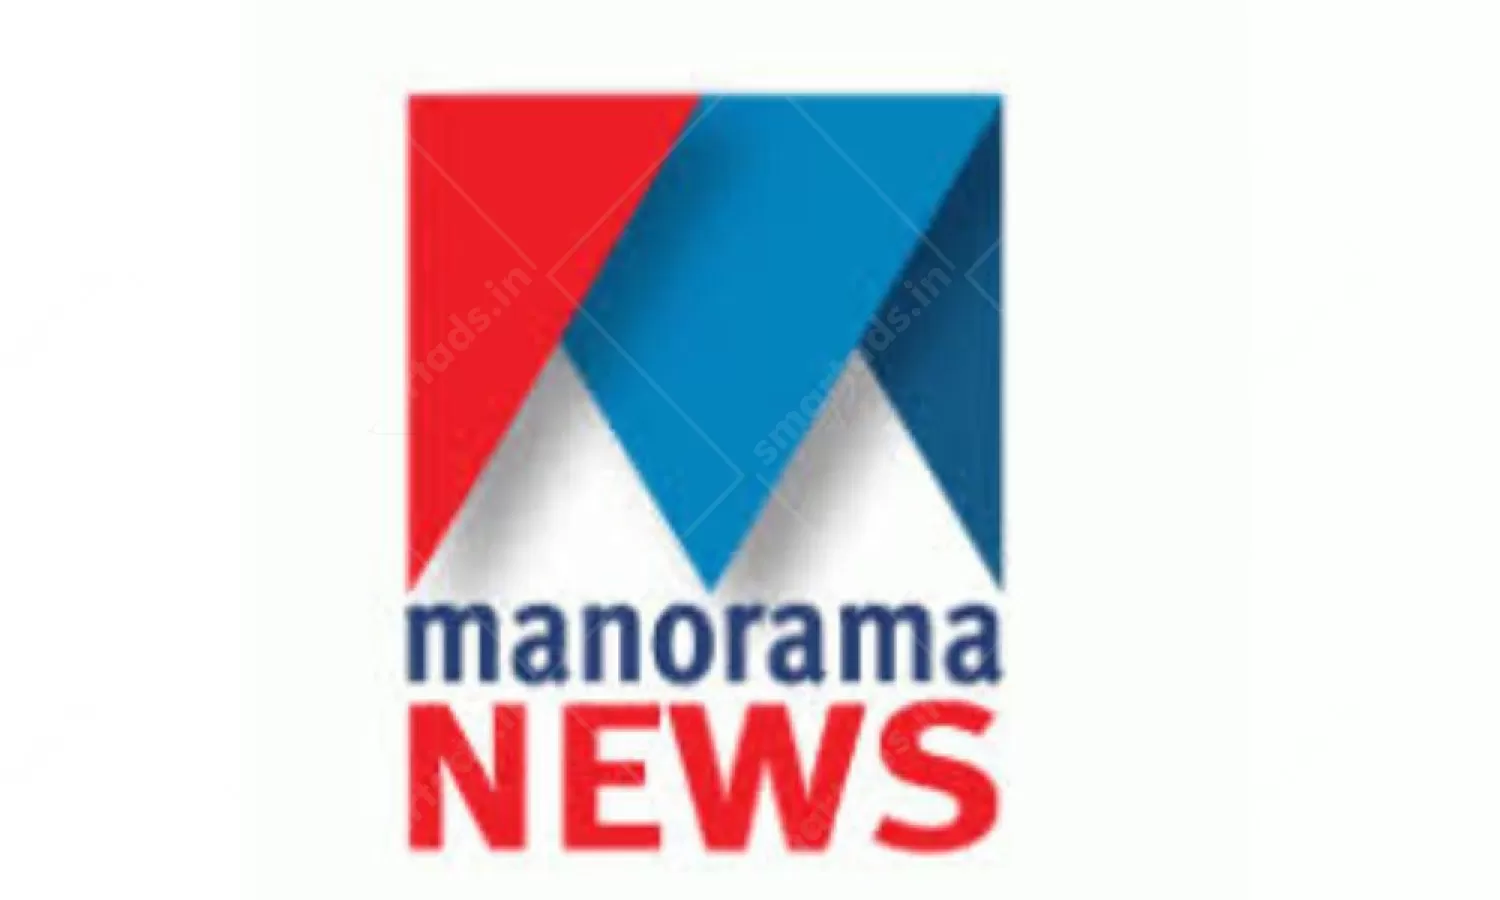 Digital Media Manorama News Advertising in India